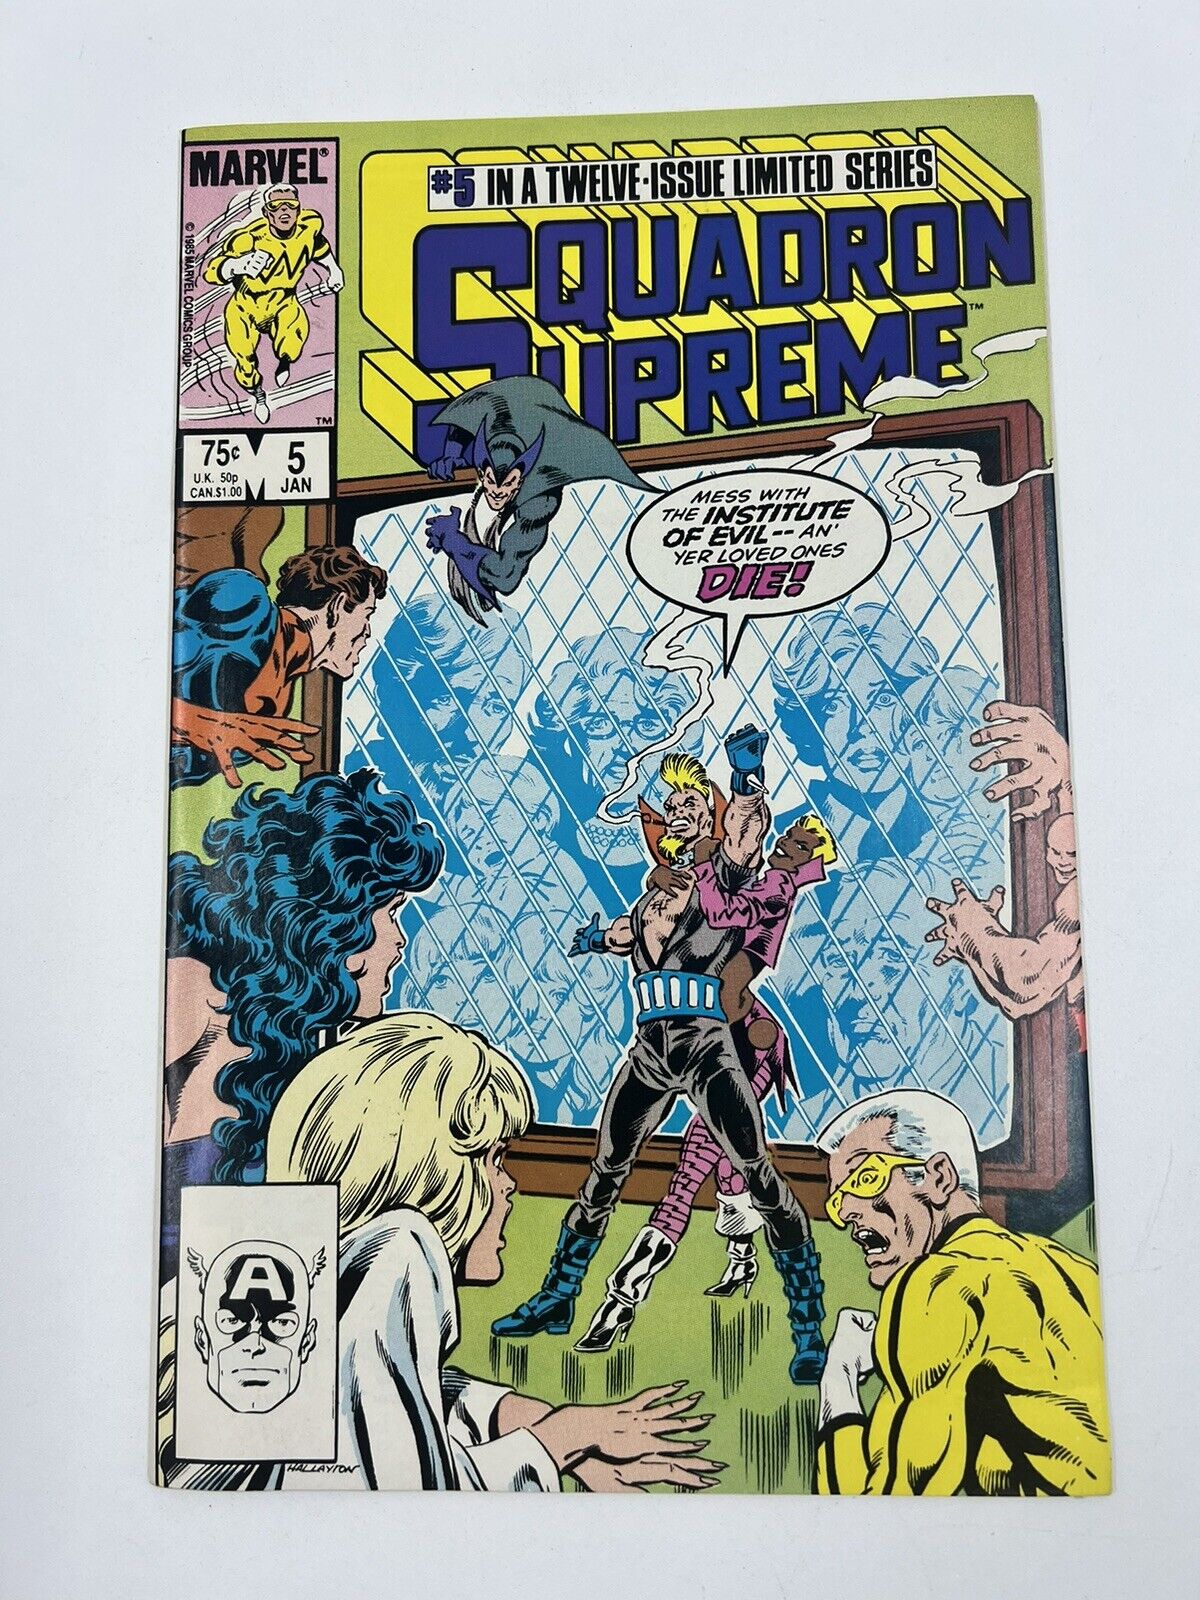 Squadron Supreme - Vol. 1, No. 5 - Marvel Comics Group - January 1986 